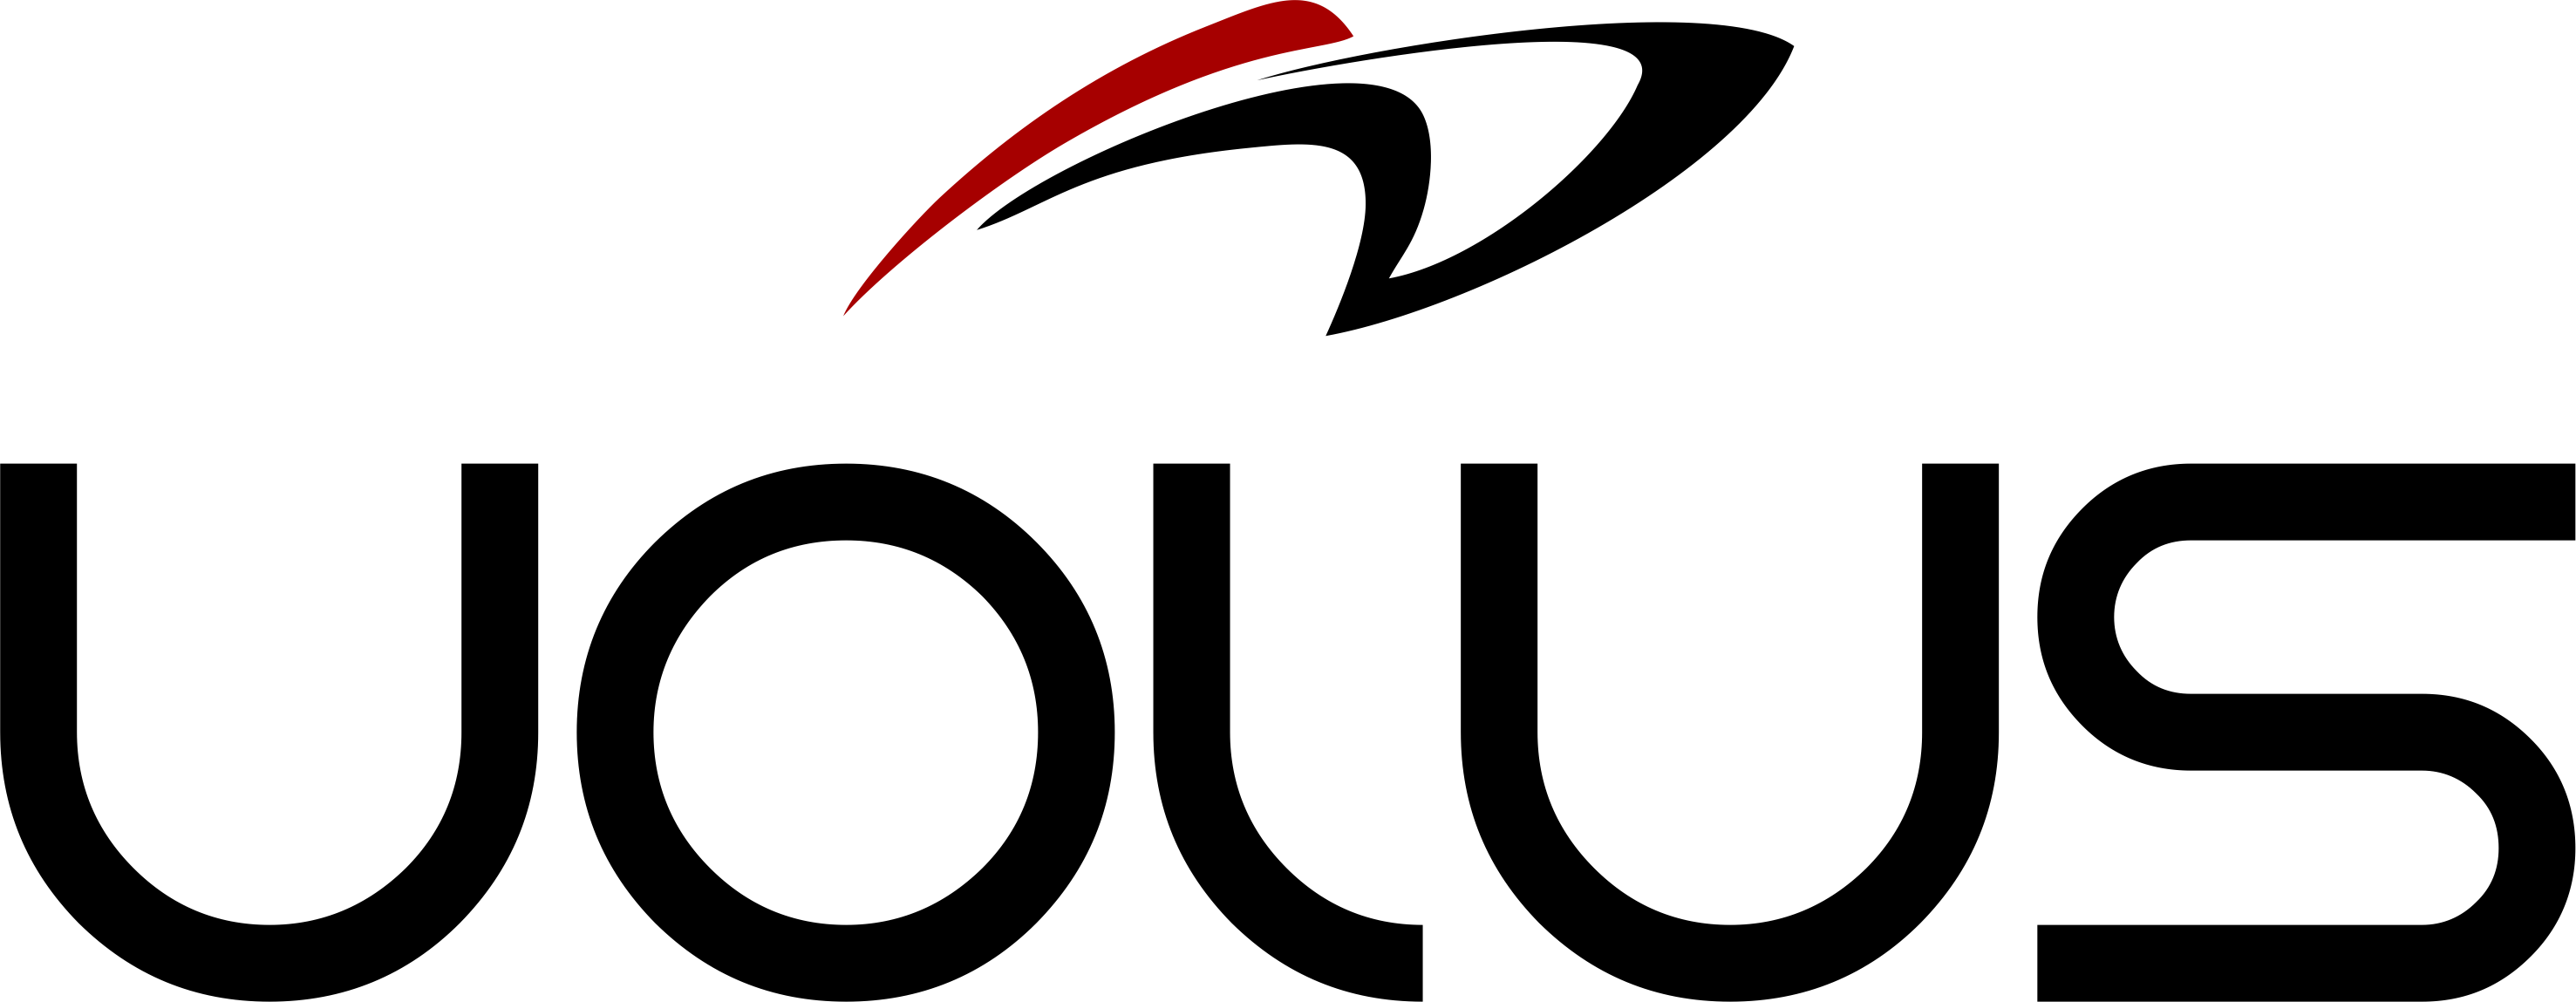 Uolus logo